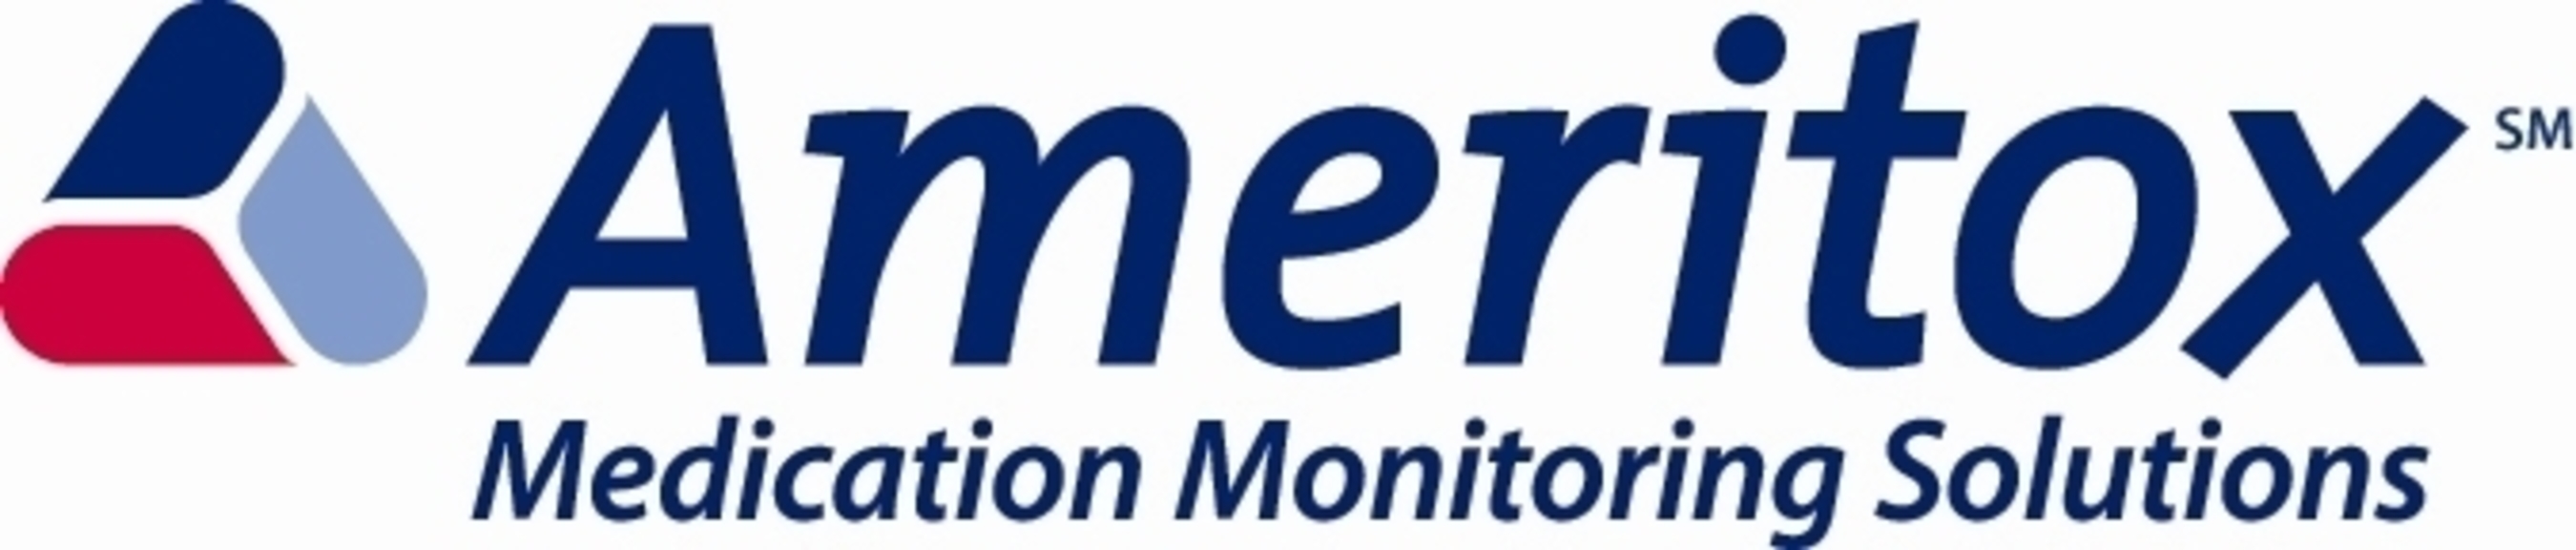 Ameritox, a national leader in medication monitoring solutions  (PRNewsFoto/Ameritox)